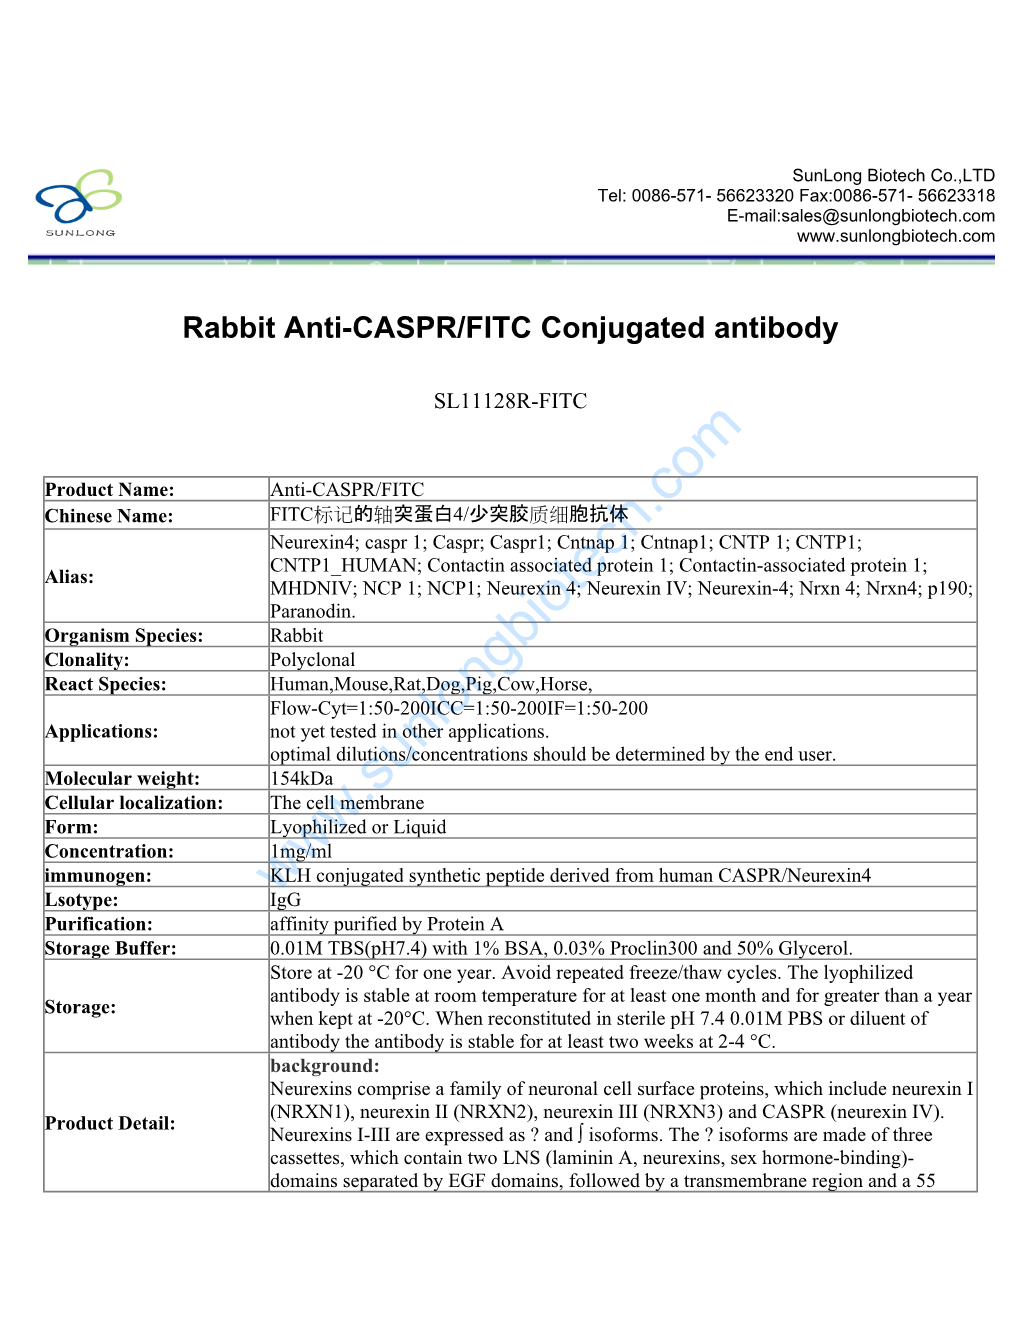 Rabbit Anti-CASPR/FITC Conjugated Antibody-SL11128R-FITC